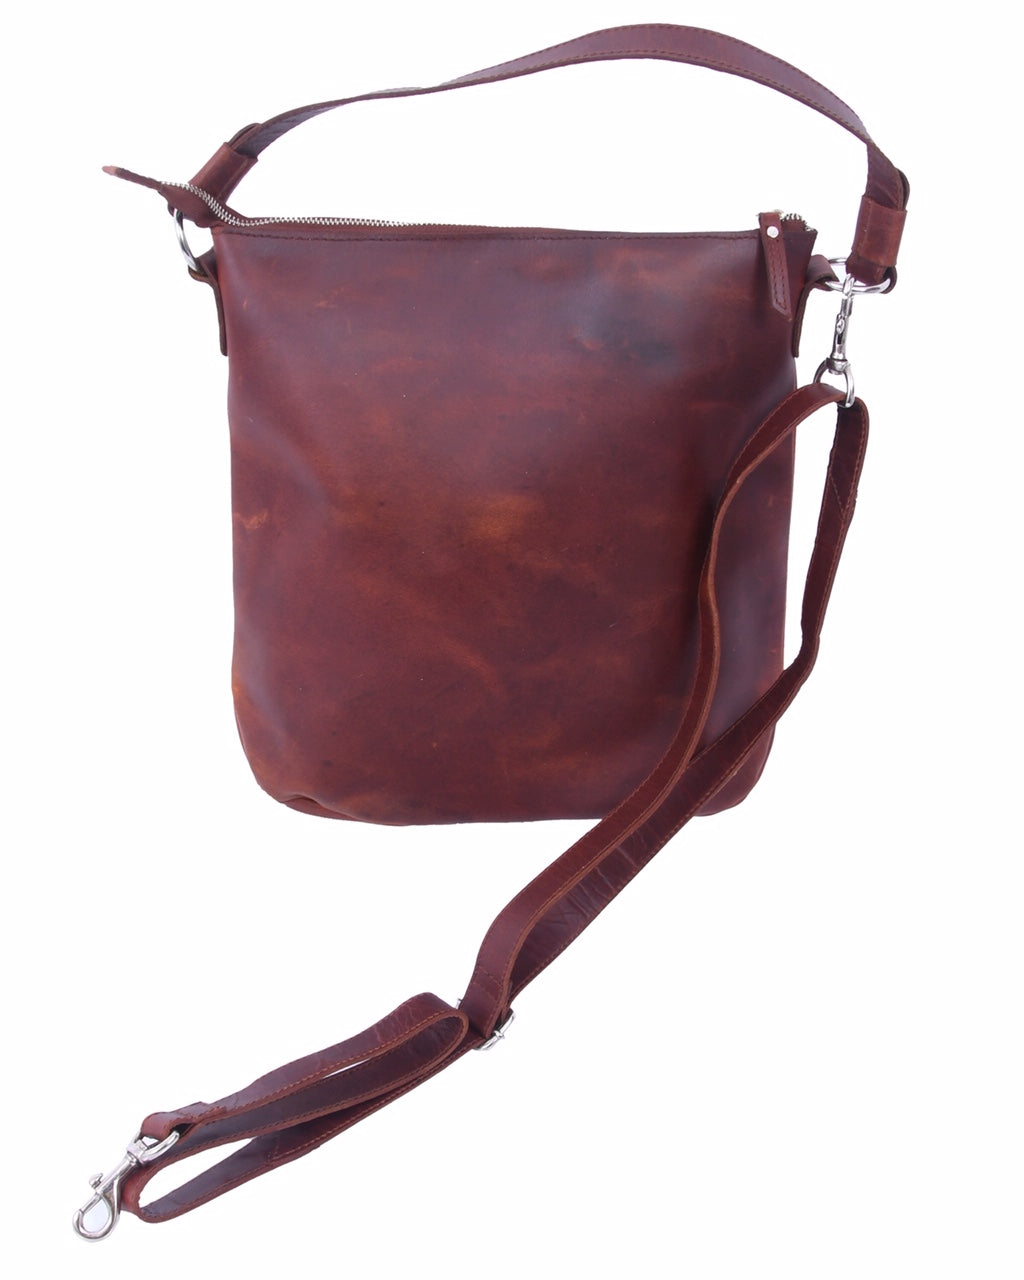 Brown Leather Sling Bag: The Classic Companion. - CELTICINDIA